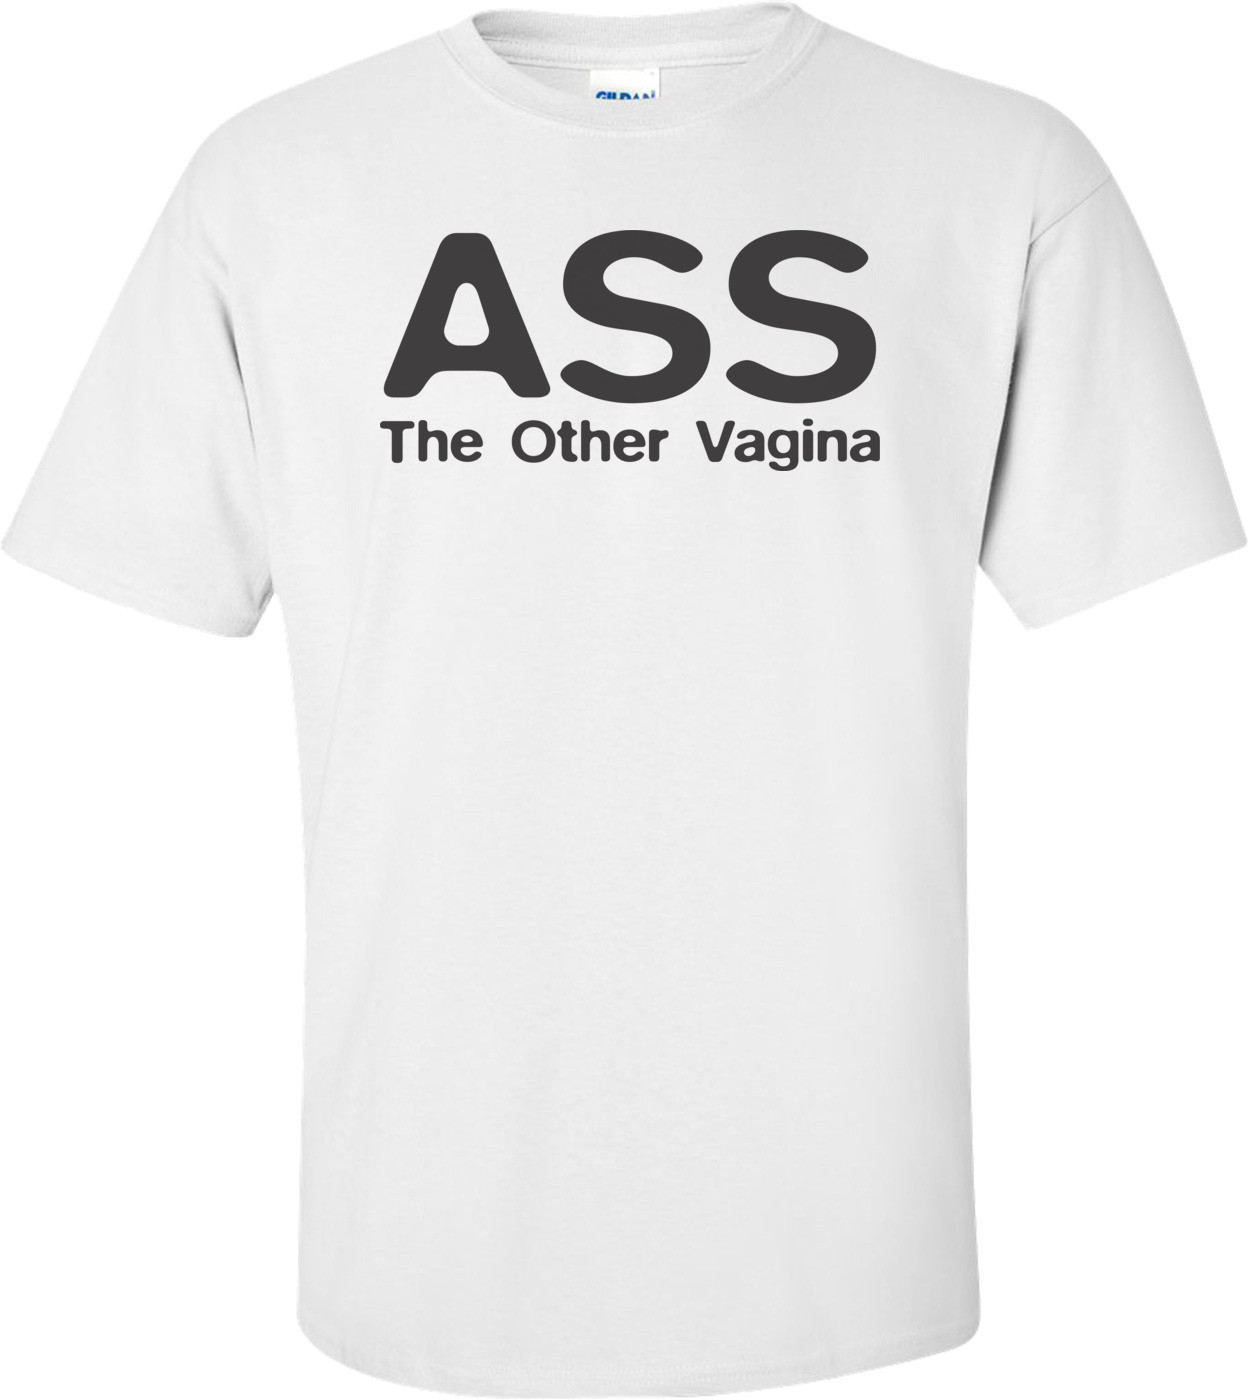 Ass The Other Vagina T-shirt